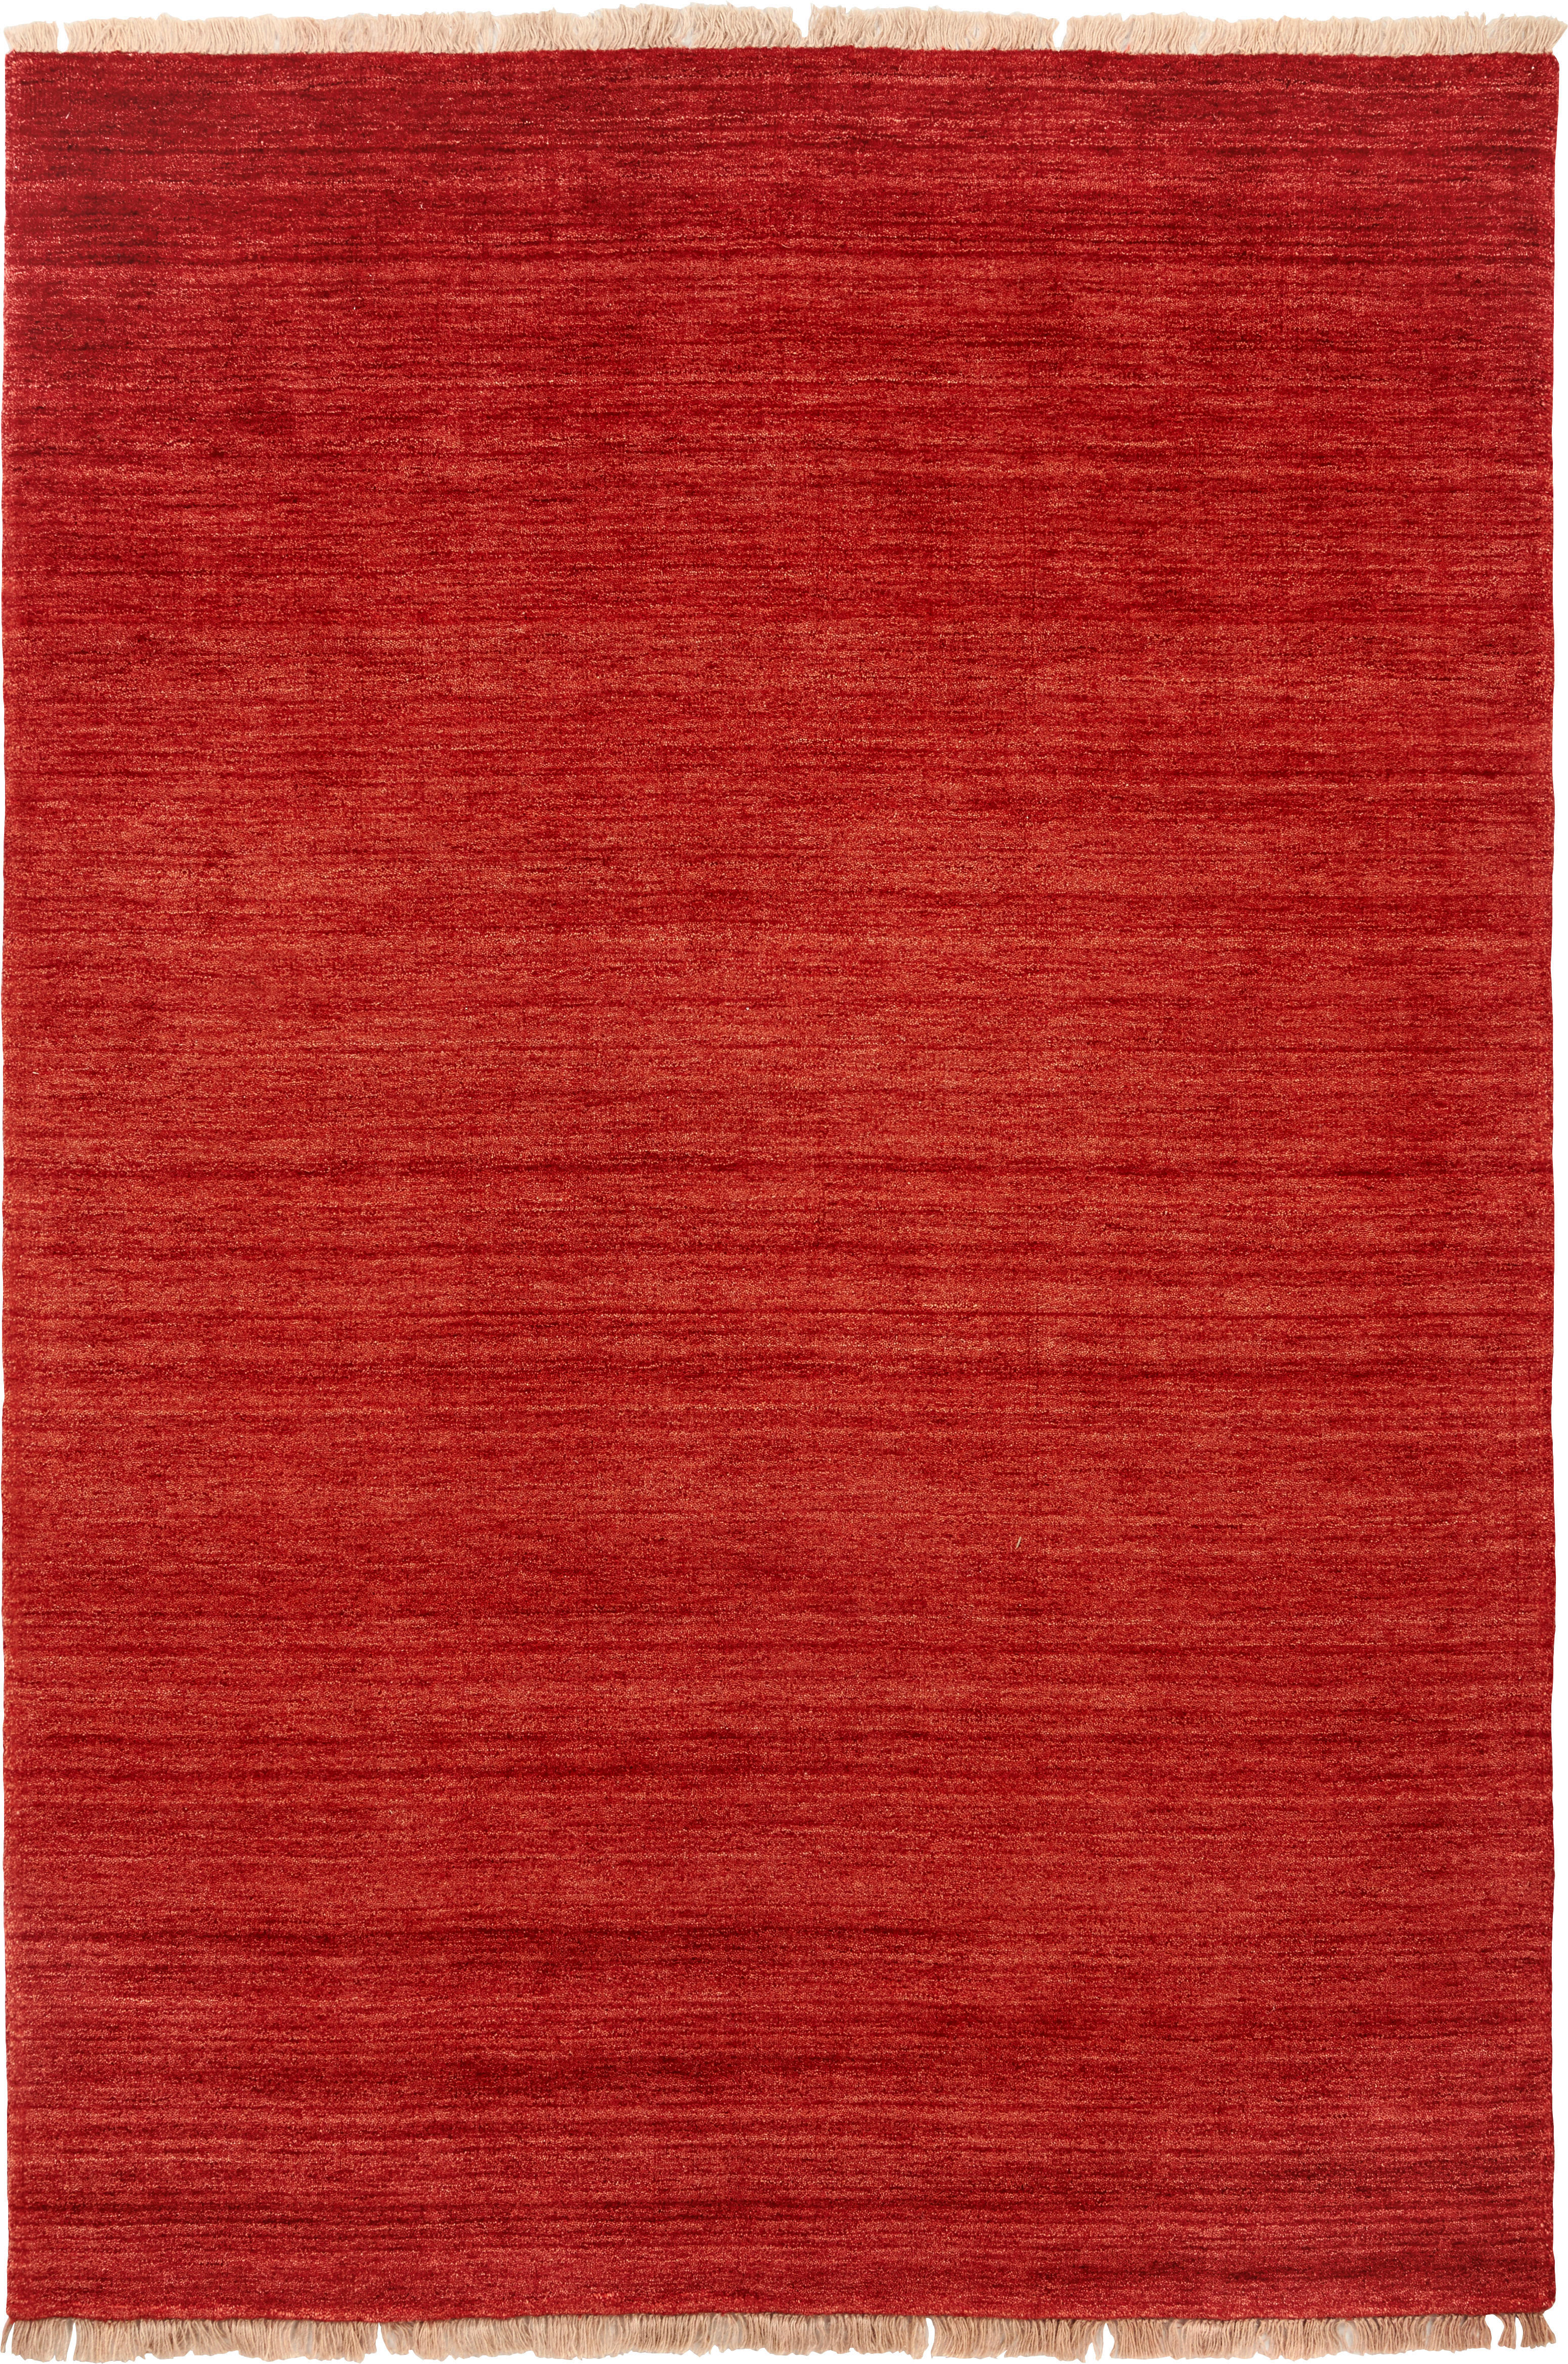 ORIENTALISK MATTA Alkatif Nomad   - röd, Klassisk, textil (60/90cm) - Cazaris